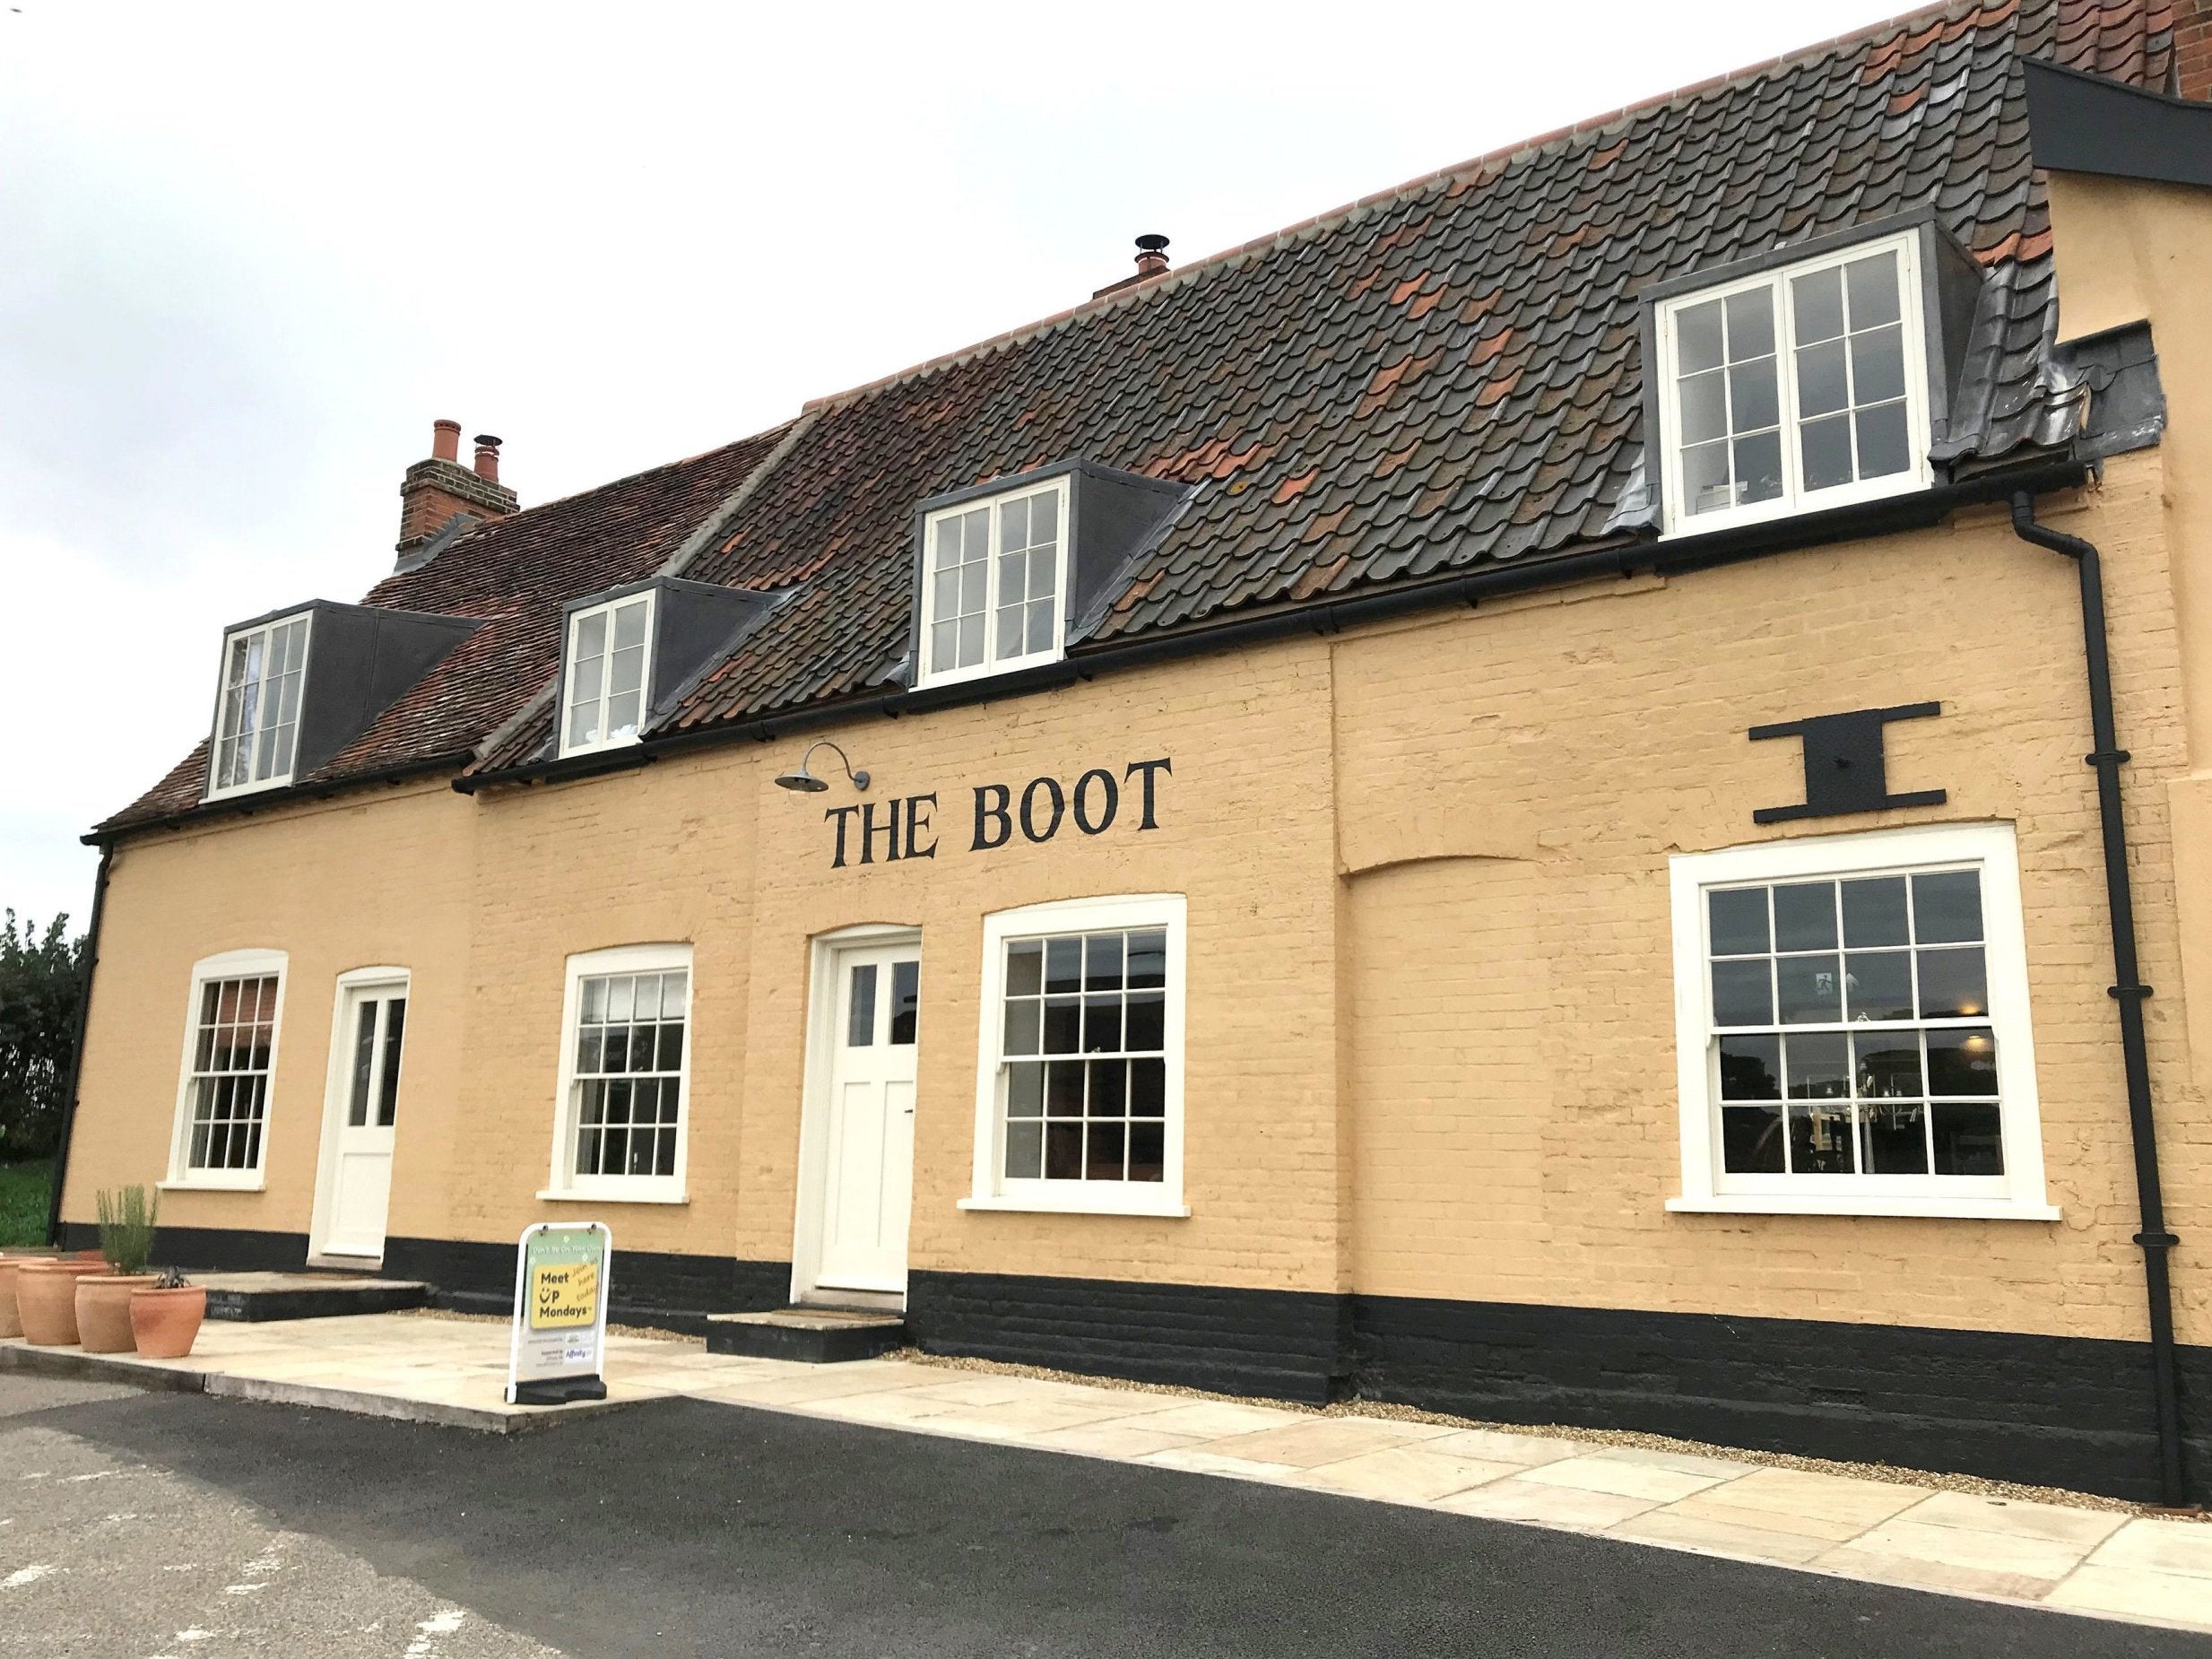 The Boot pub in Freston near Ipswich, Suffolk